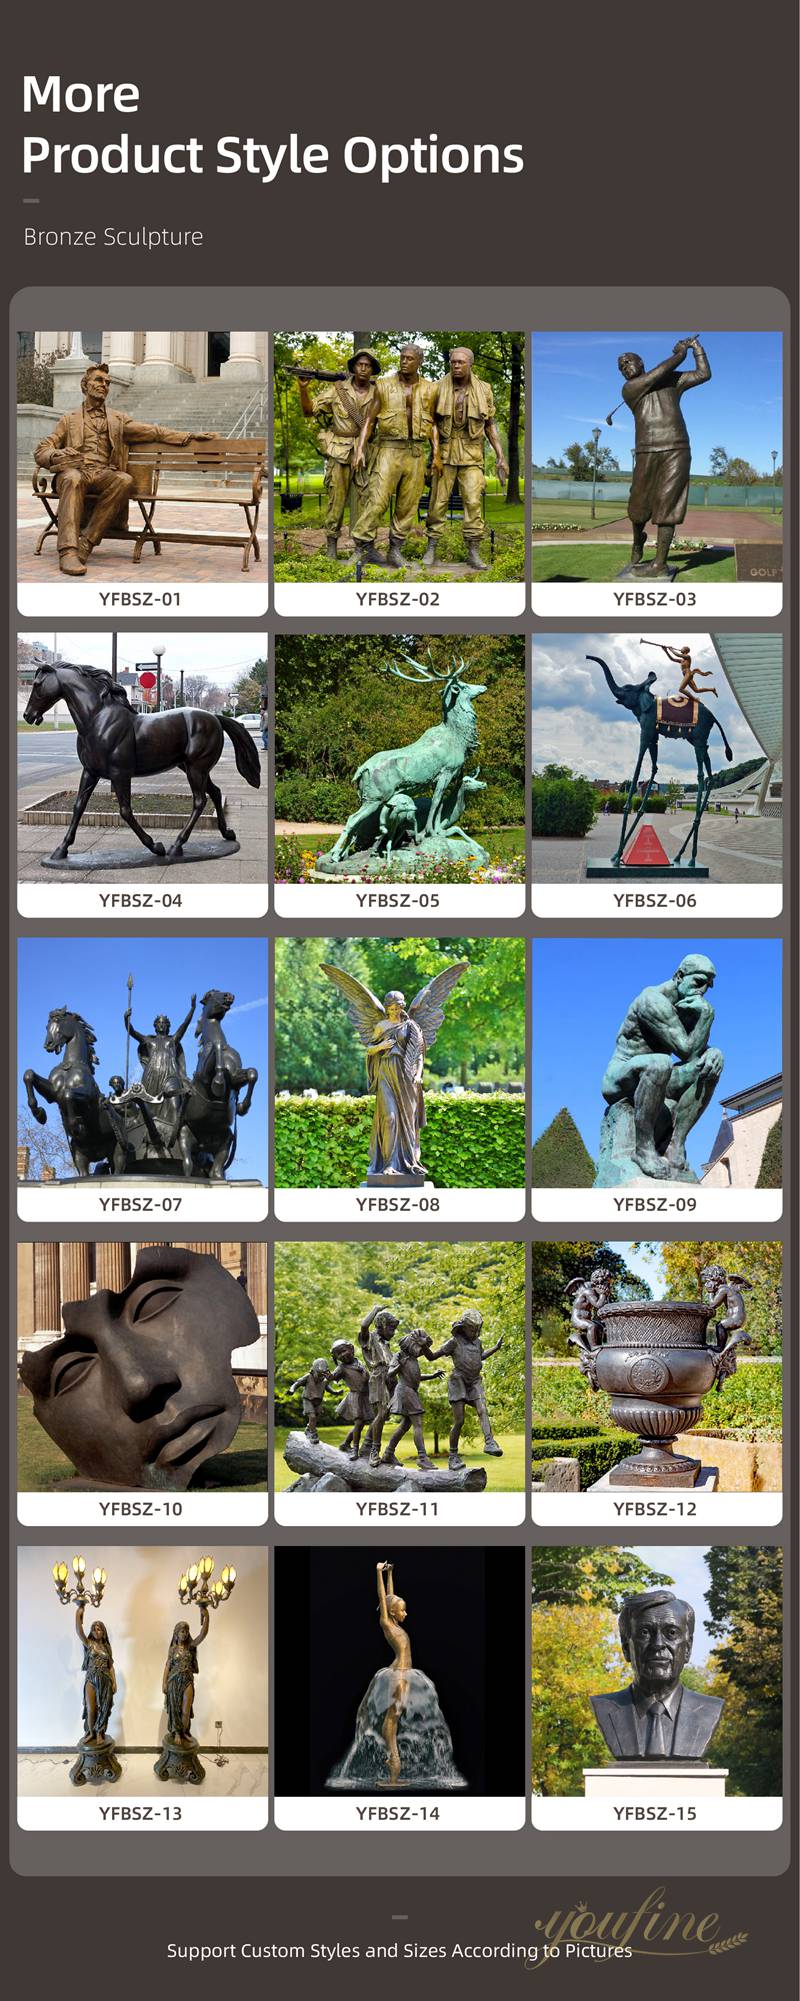 YOUFINE bronze sculpture for sale